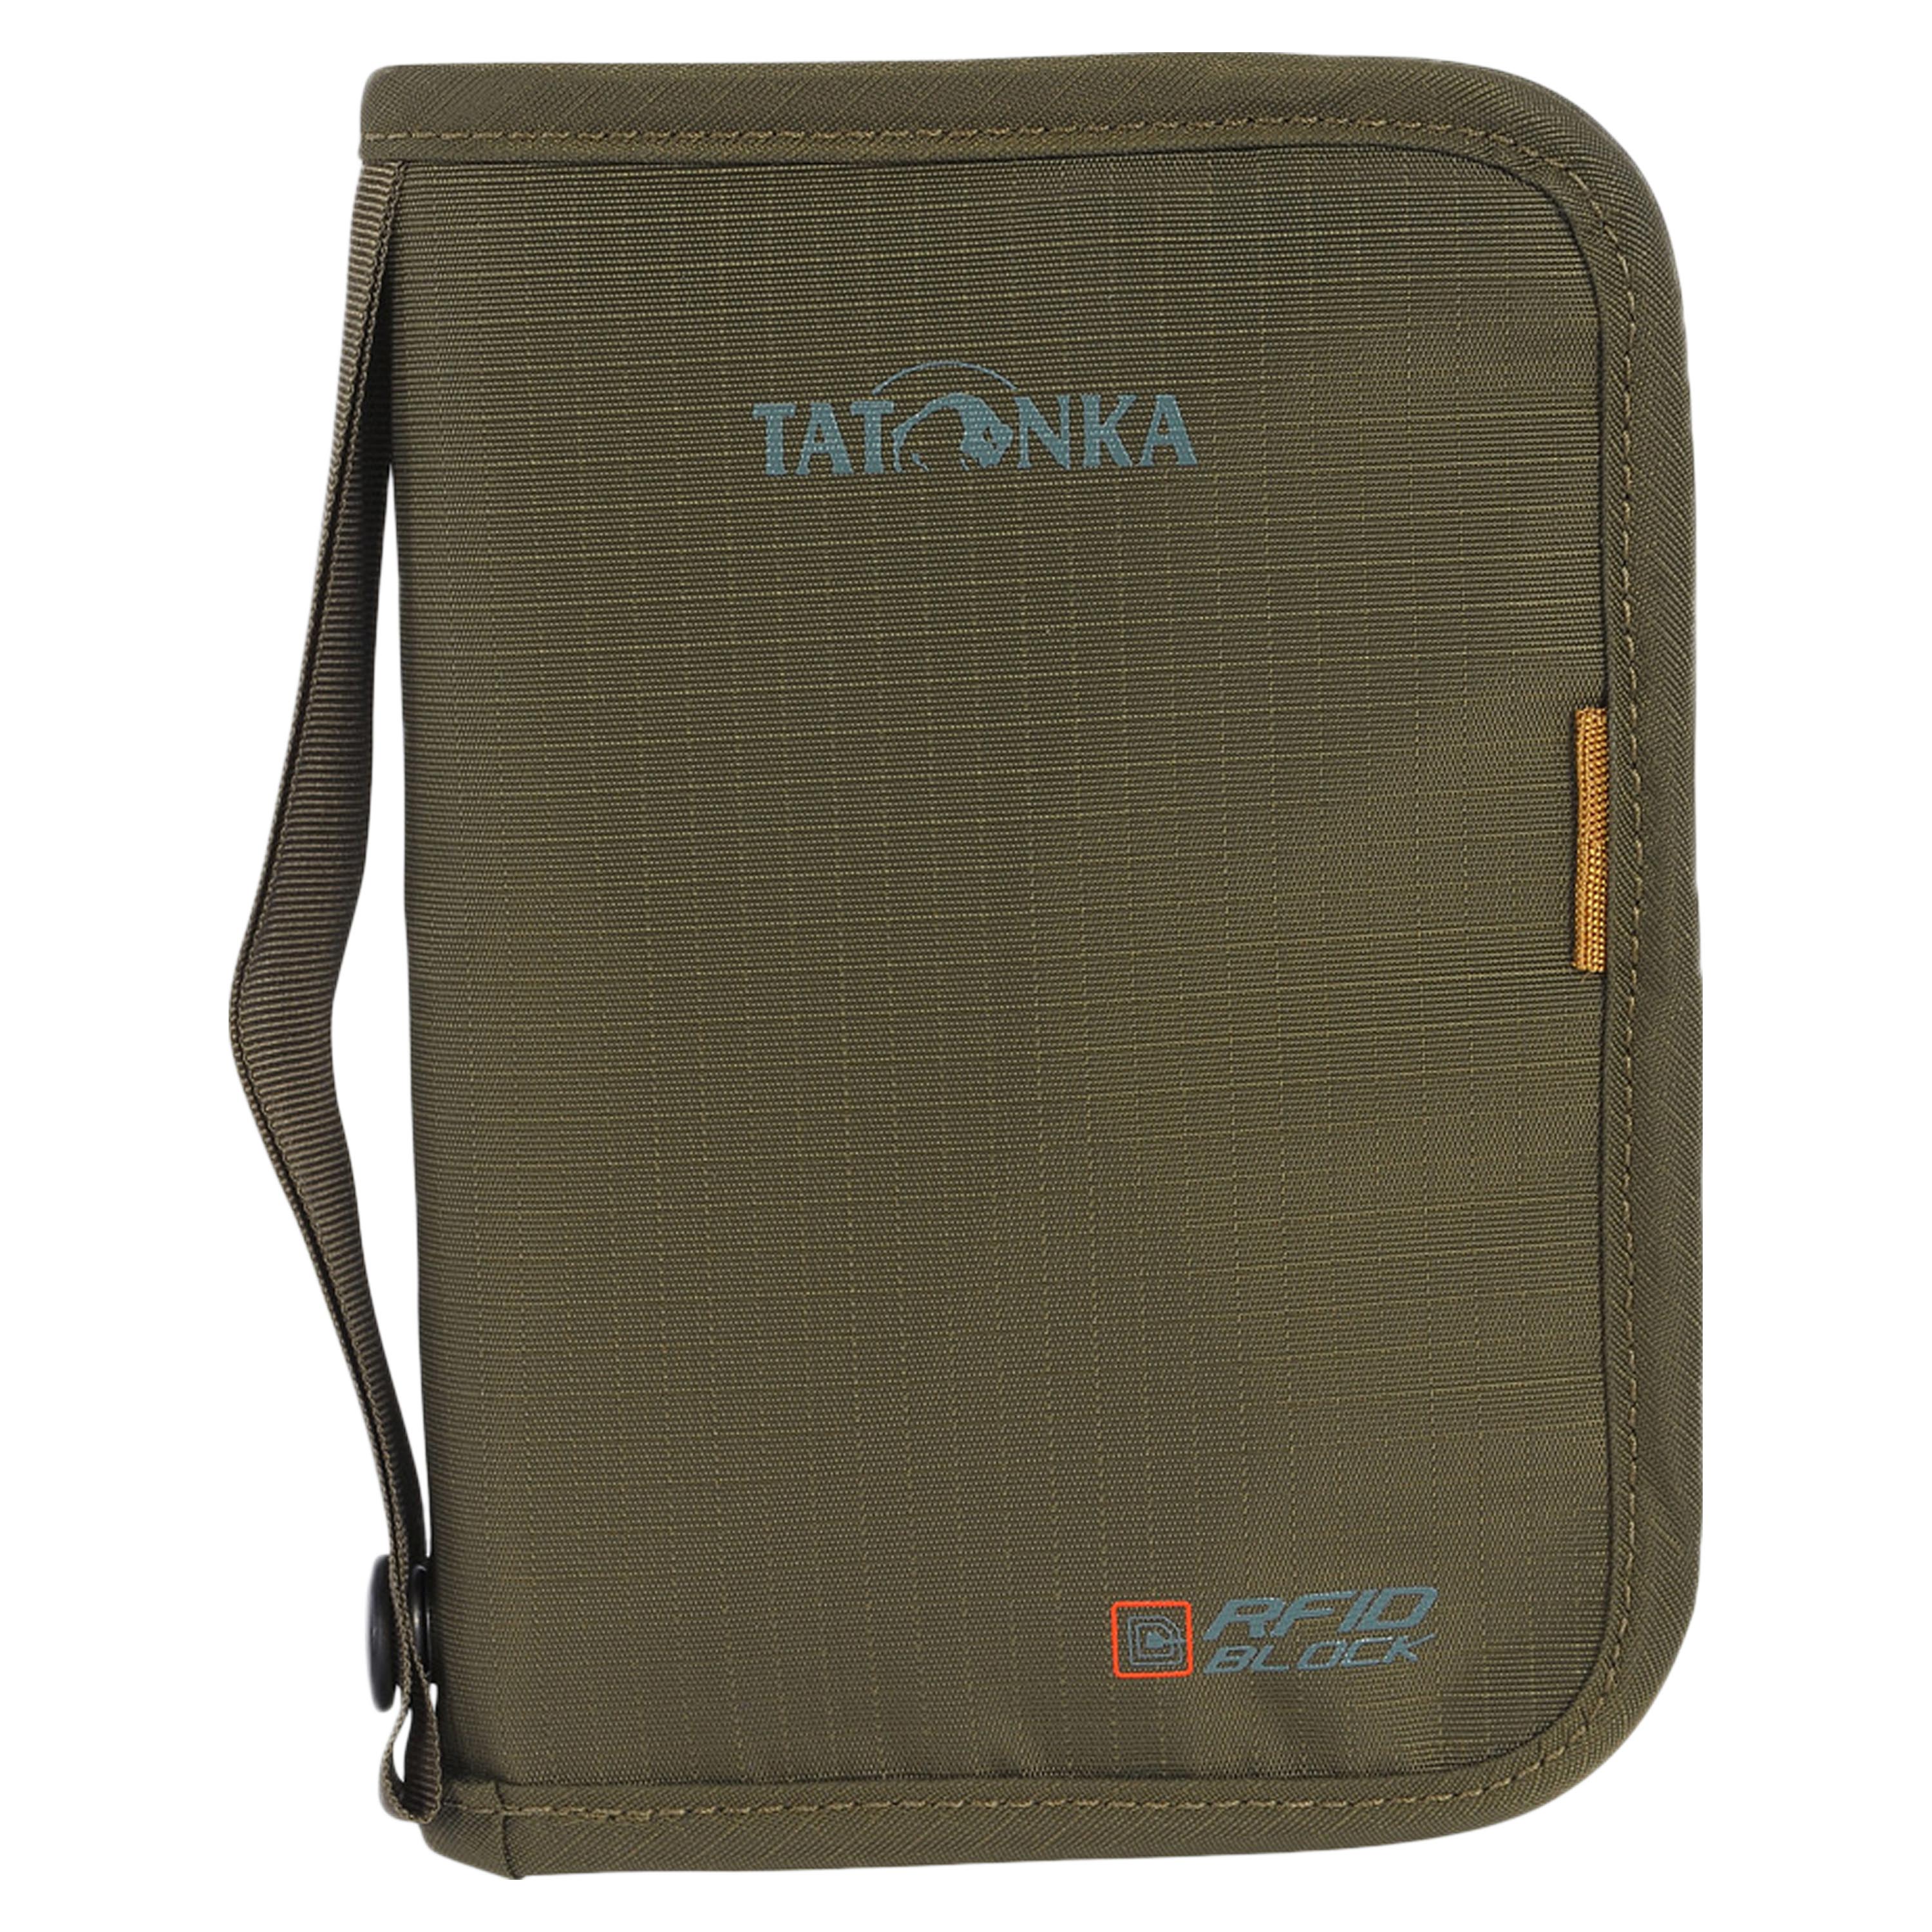 Tatonka check in RFID b verde oliva-mantos viaje bolsa con RFID ausleseschutz